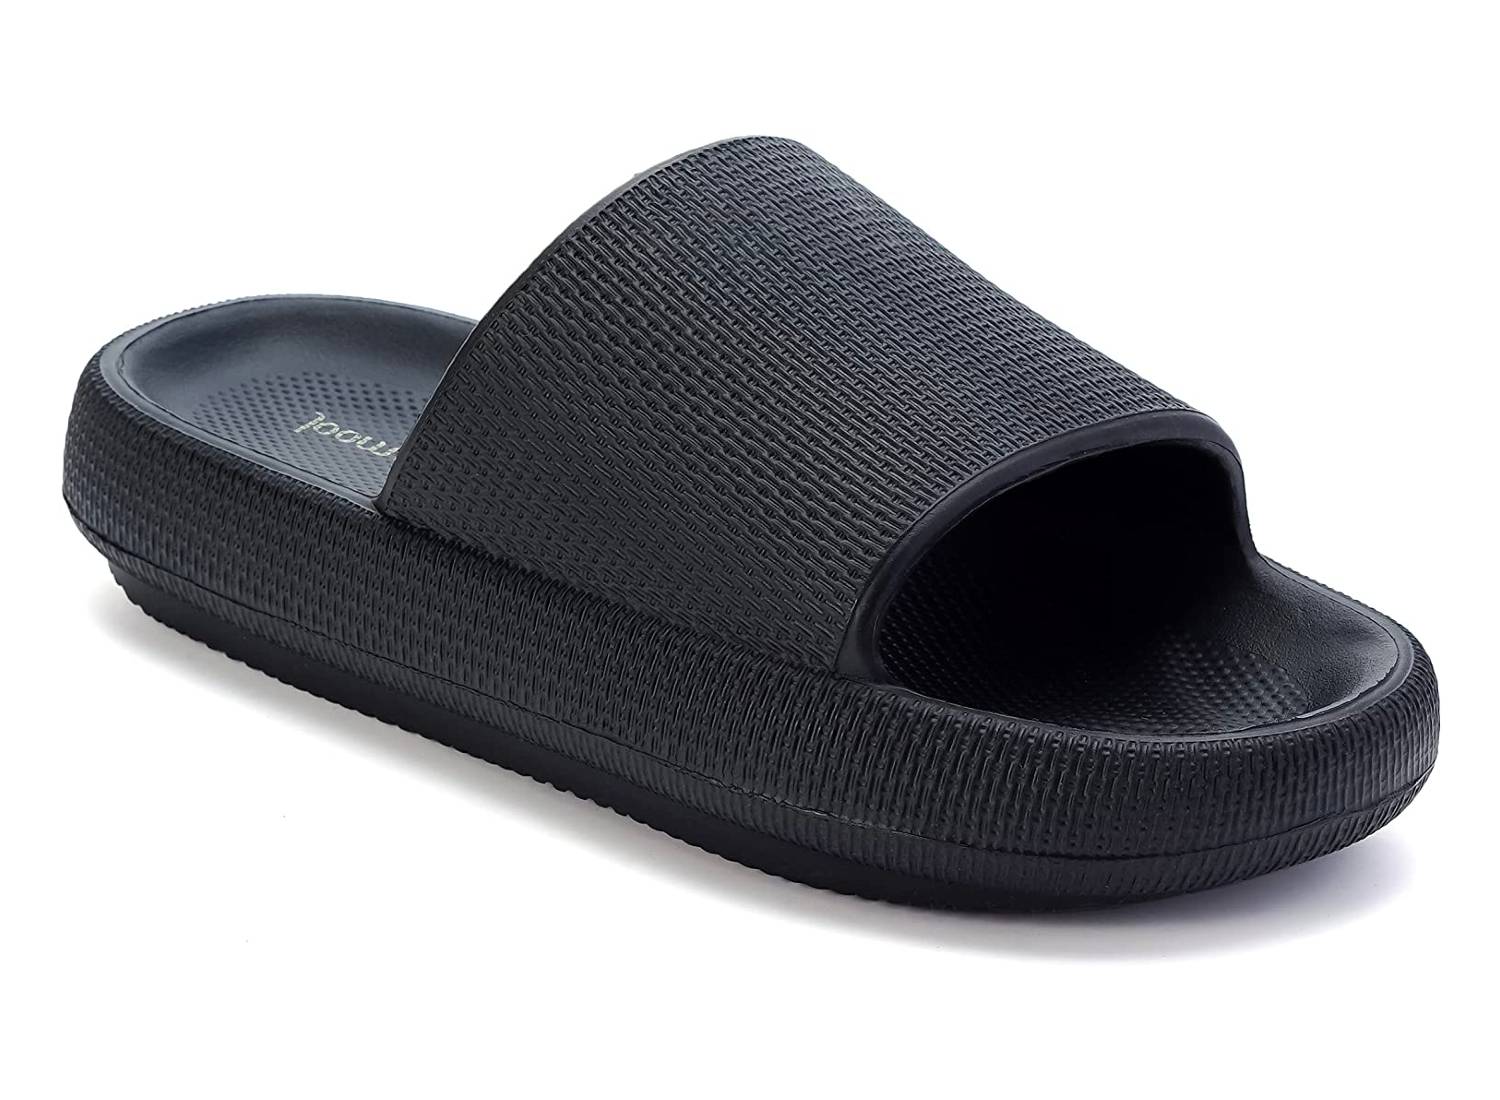 A ultra-cushioned black slide sandal